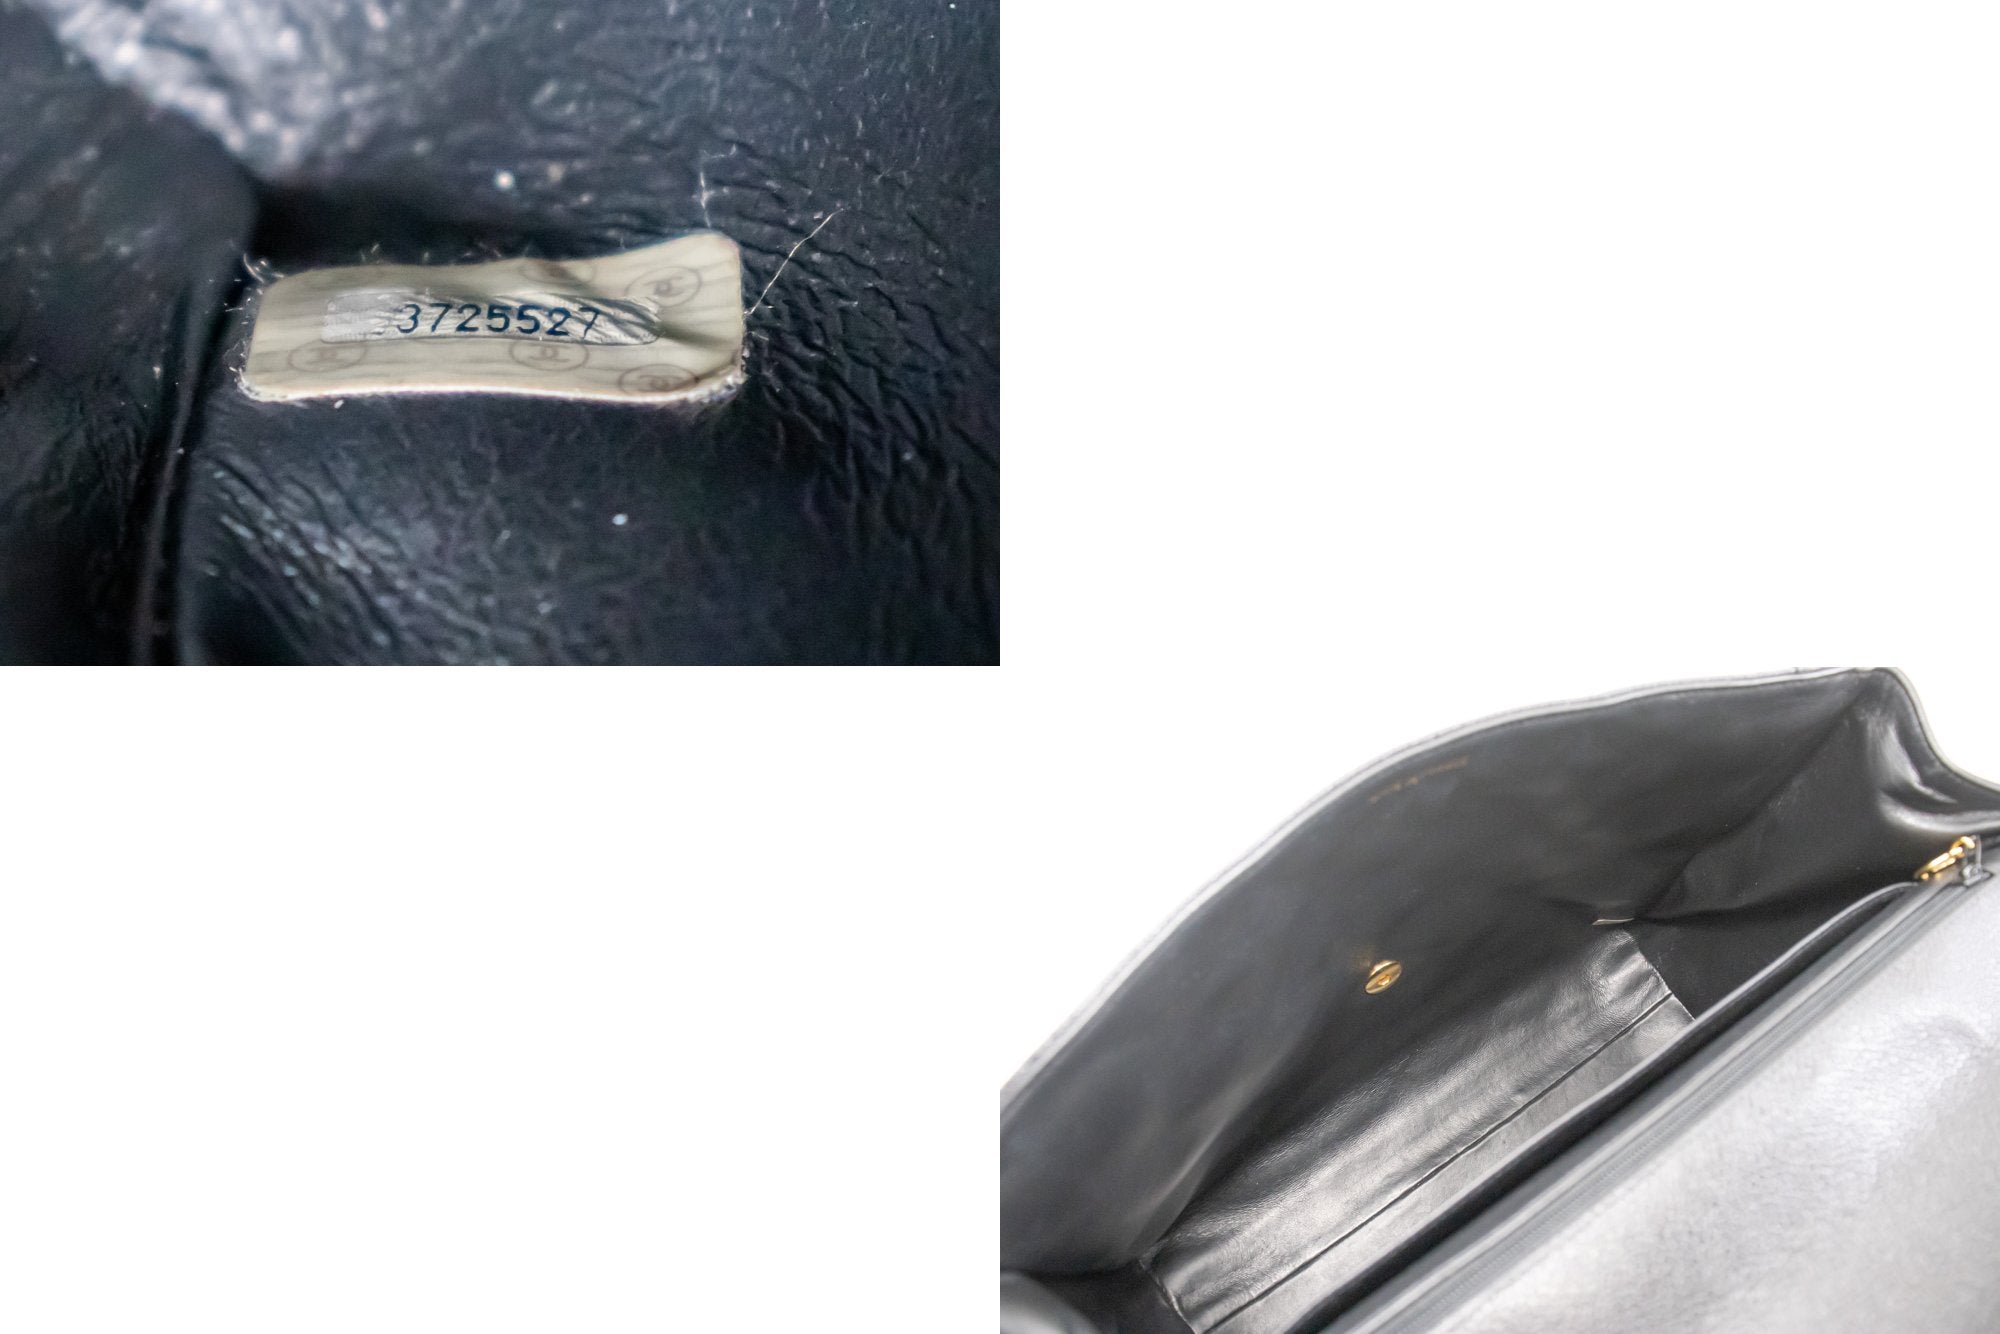 CHANEL, Bags, Chanel Metallic Caviar Quilted Medium Cc Filigree Flap  Silver Crossbody Bag